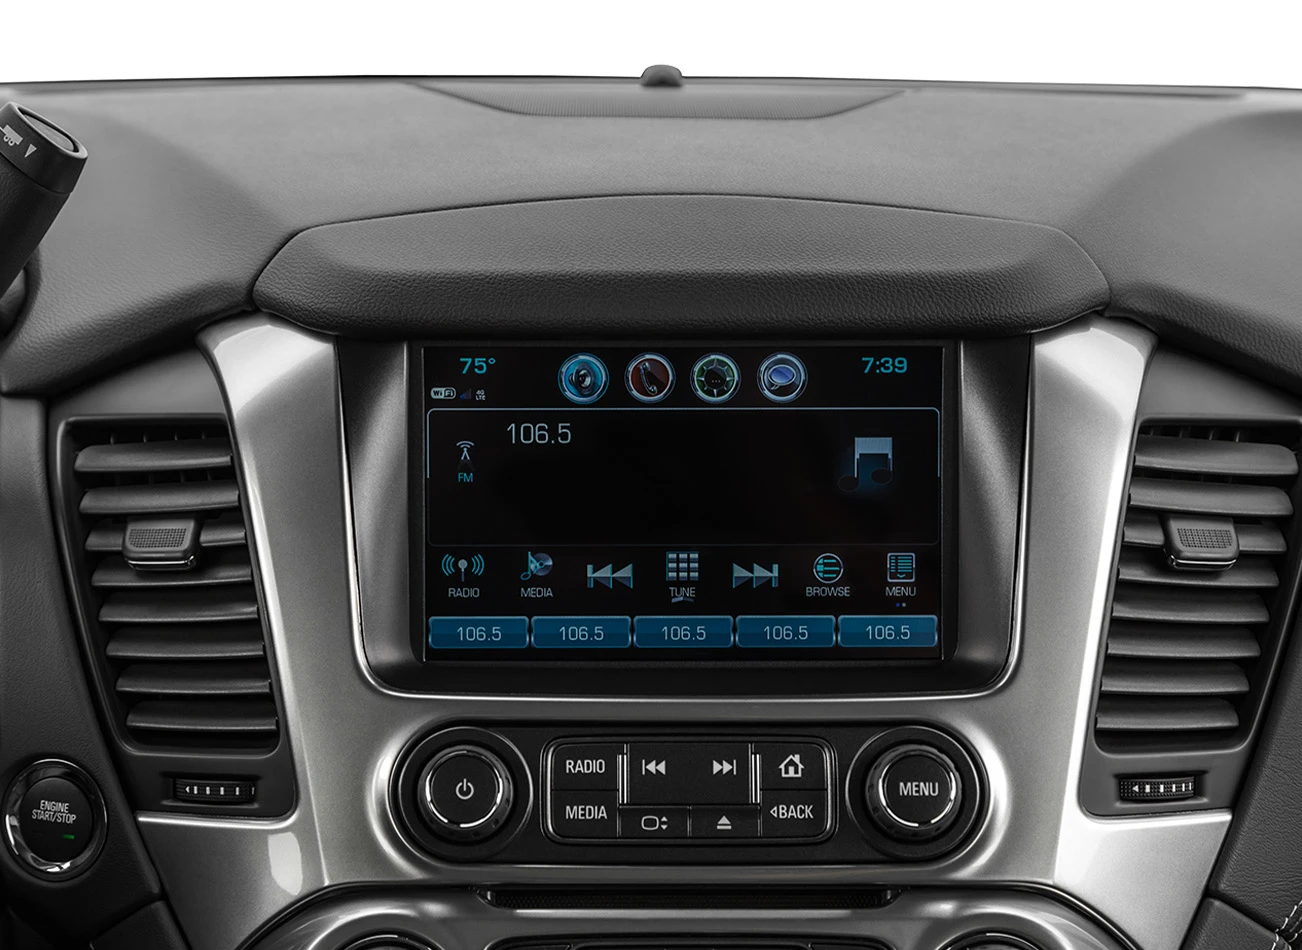 2020 Chevrolet Suburban Review: Entertainment display | CarMax